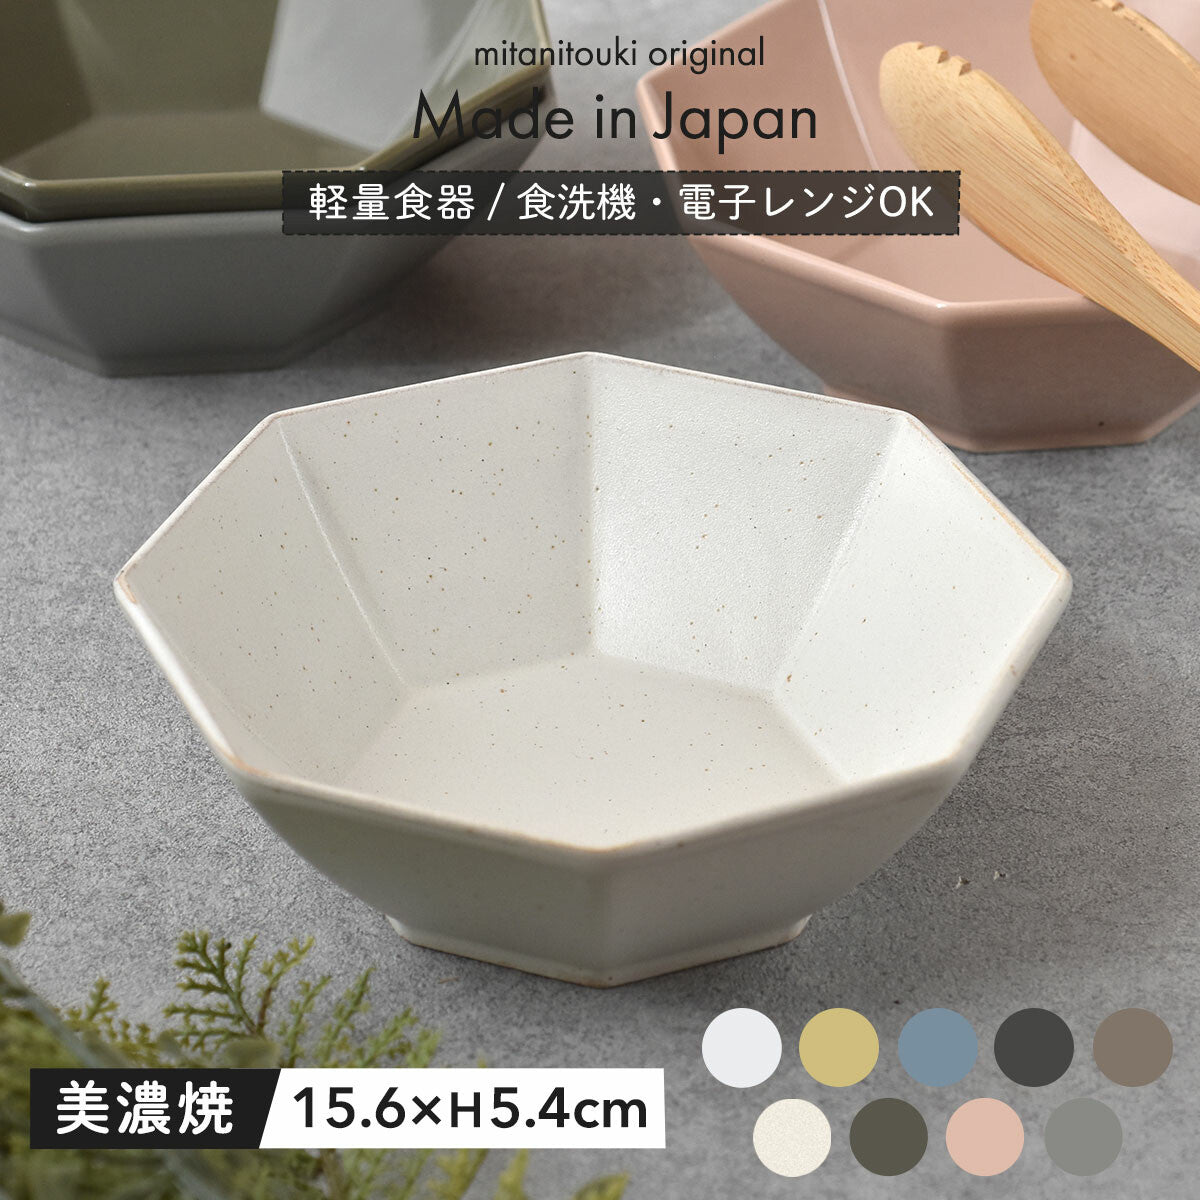 Mitanitouki “Arde” Octagonal Plate and Bowl, Minoware